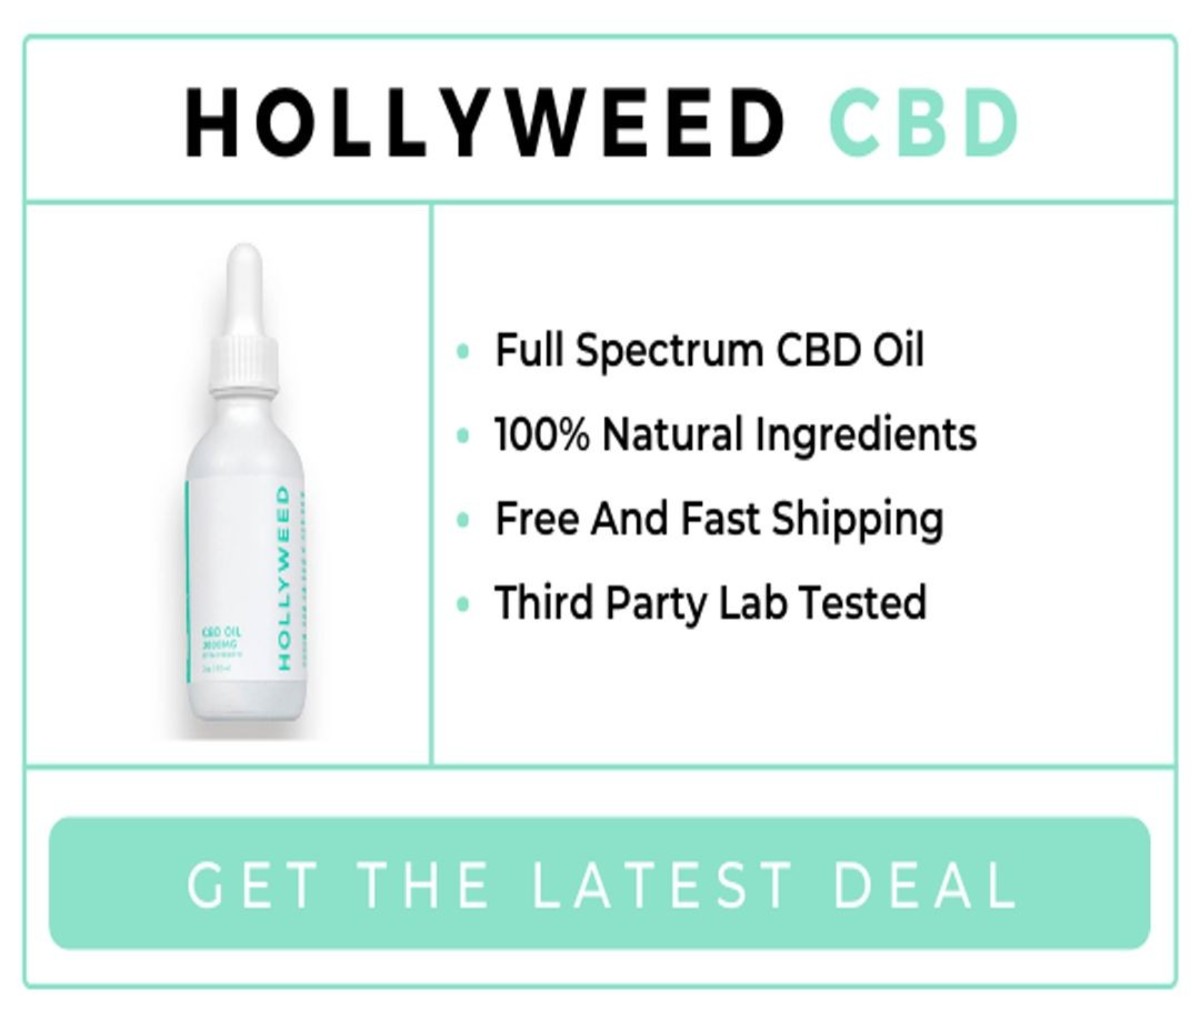 Hollyweed CBD: Most Popular Full Spectrum Hemp Seed Oil